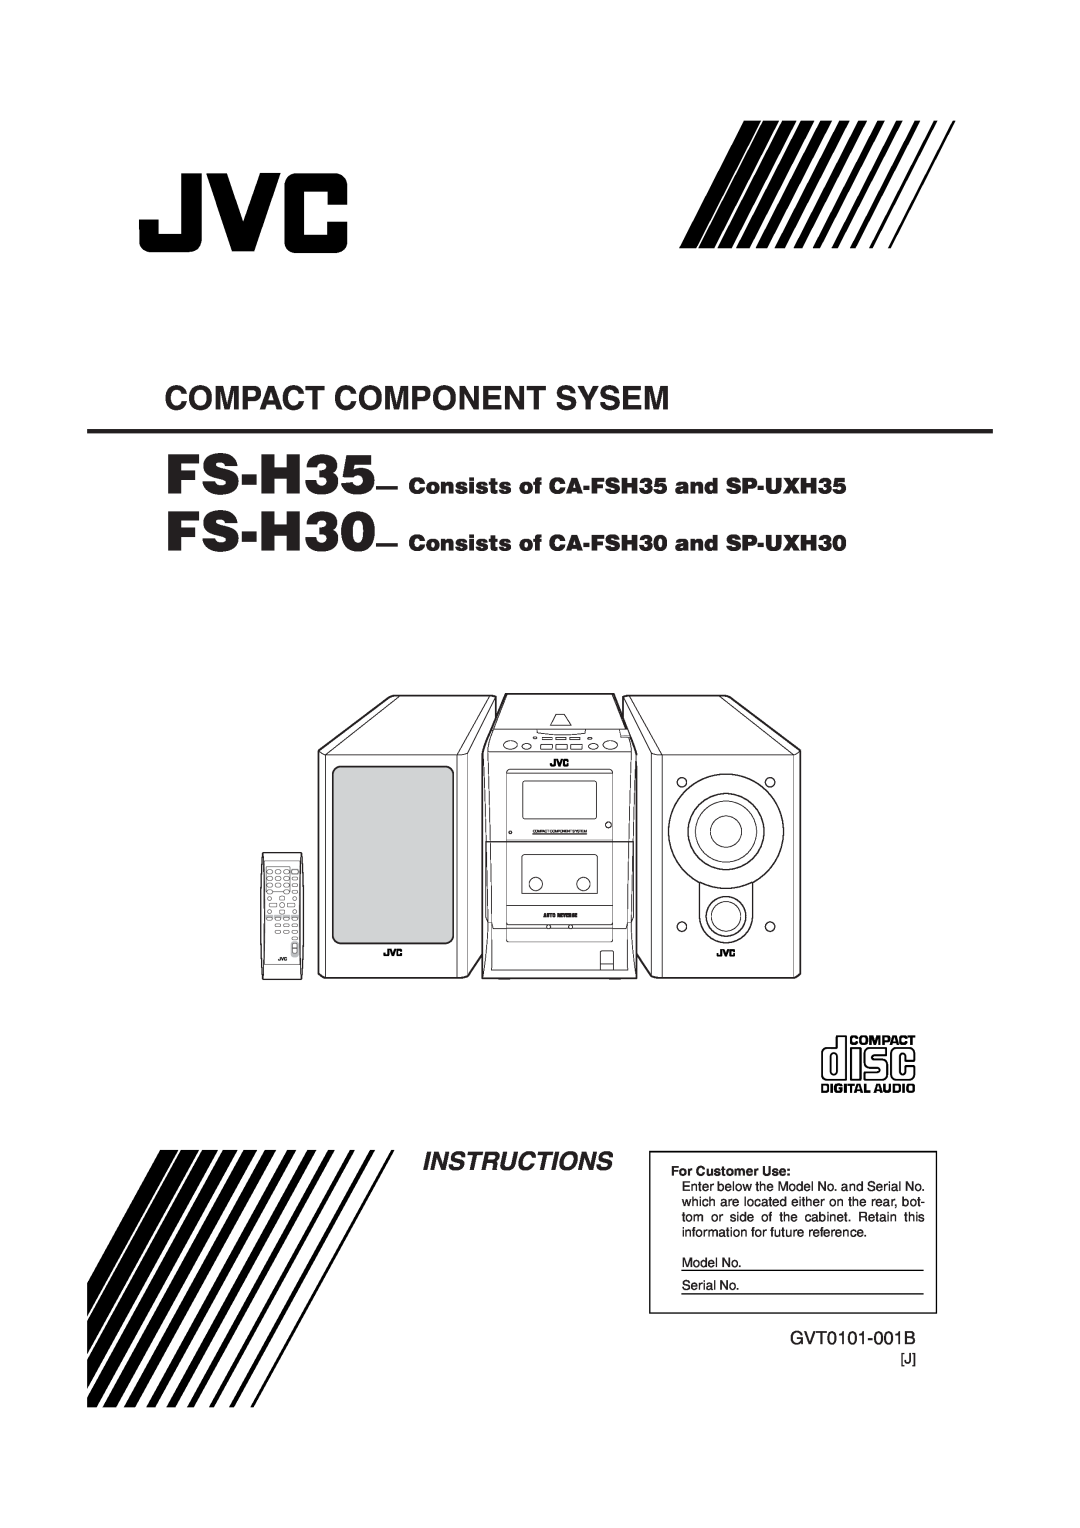 JVC manual Instructions, FS-H35-Consists of CA-FSH35and SP-UXH35, FS-H30-Consists of CA-FSH30and SP-UXH30, GVT0101-001B 